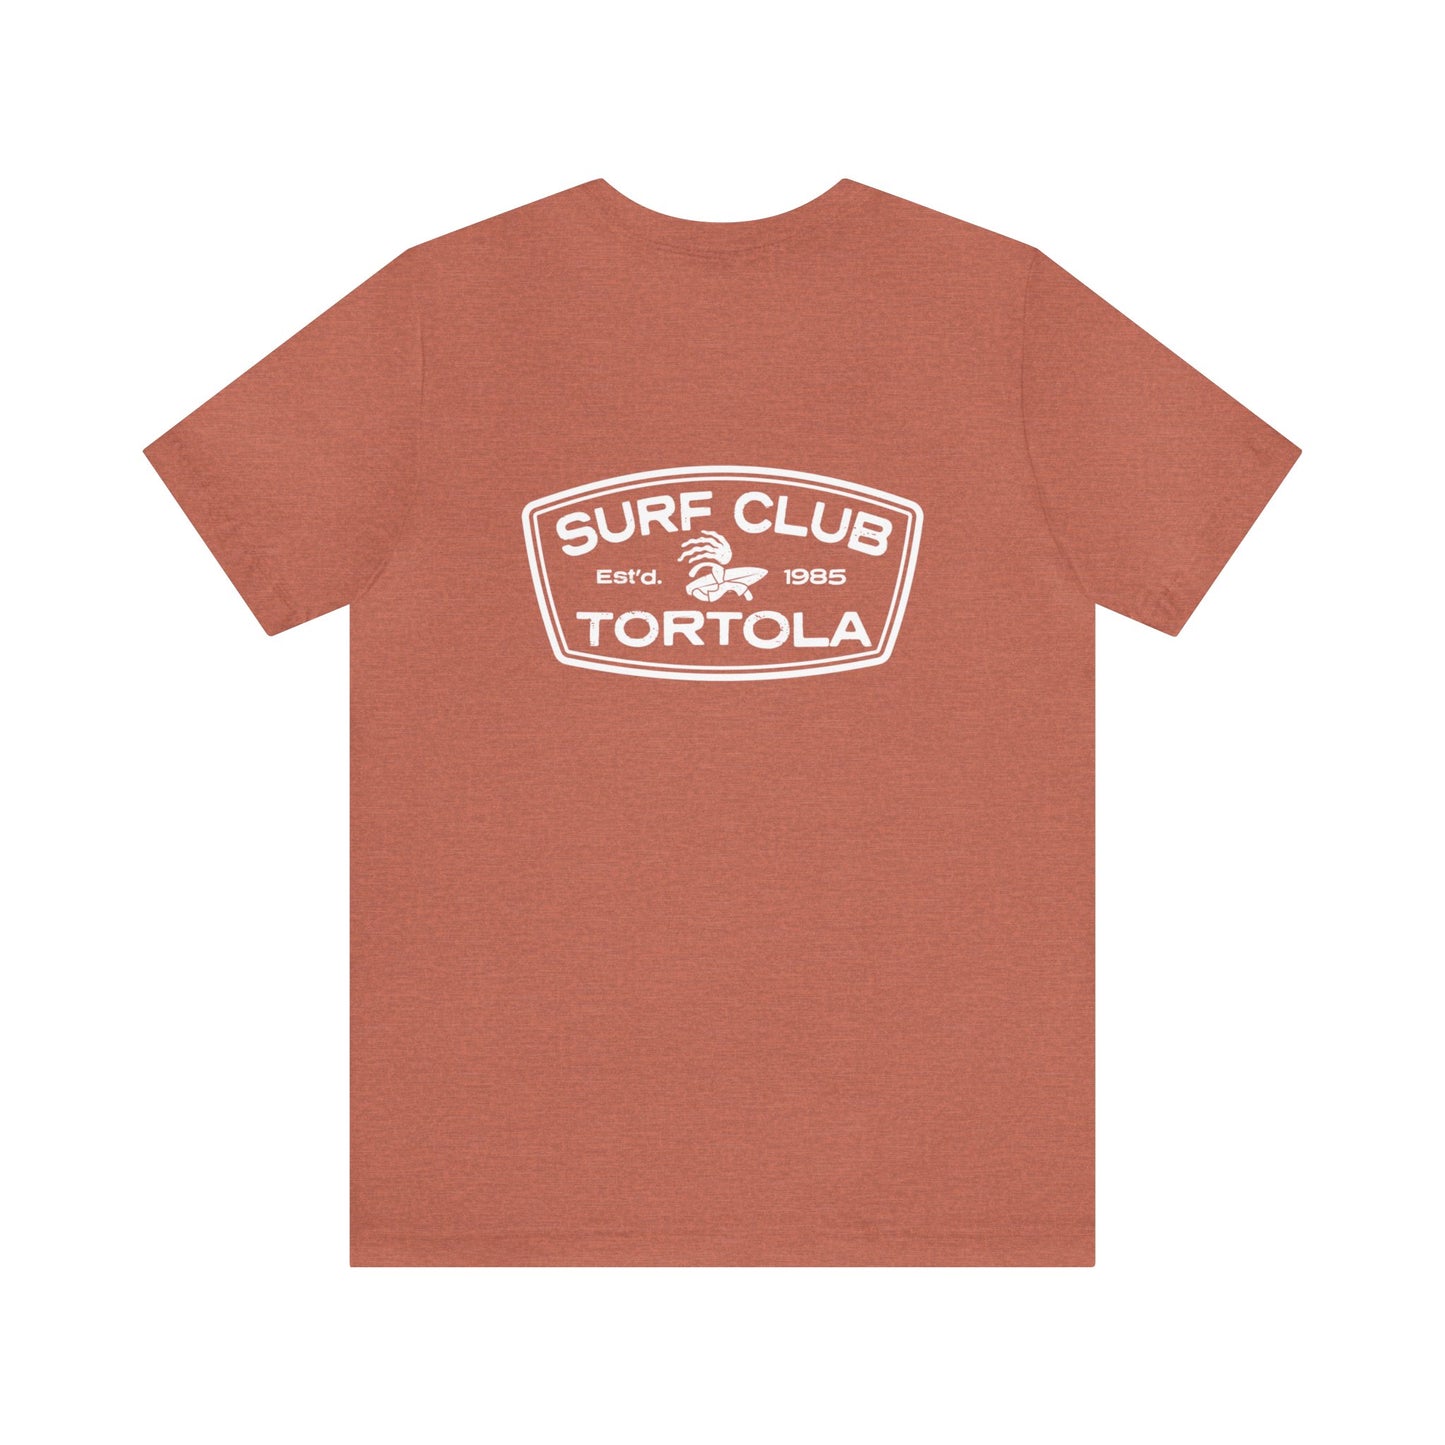 "Surf Club Tortola" Unisex S/S Tee